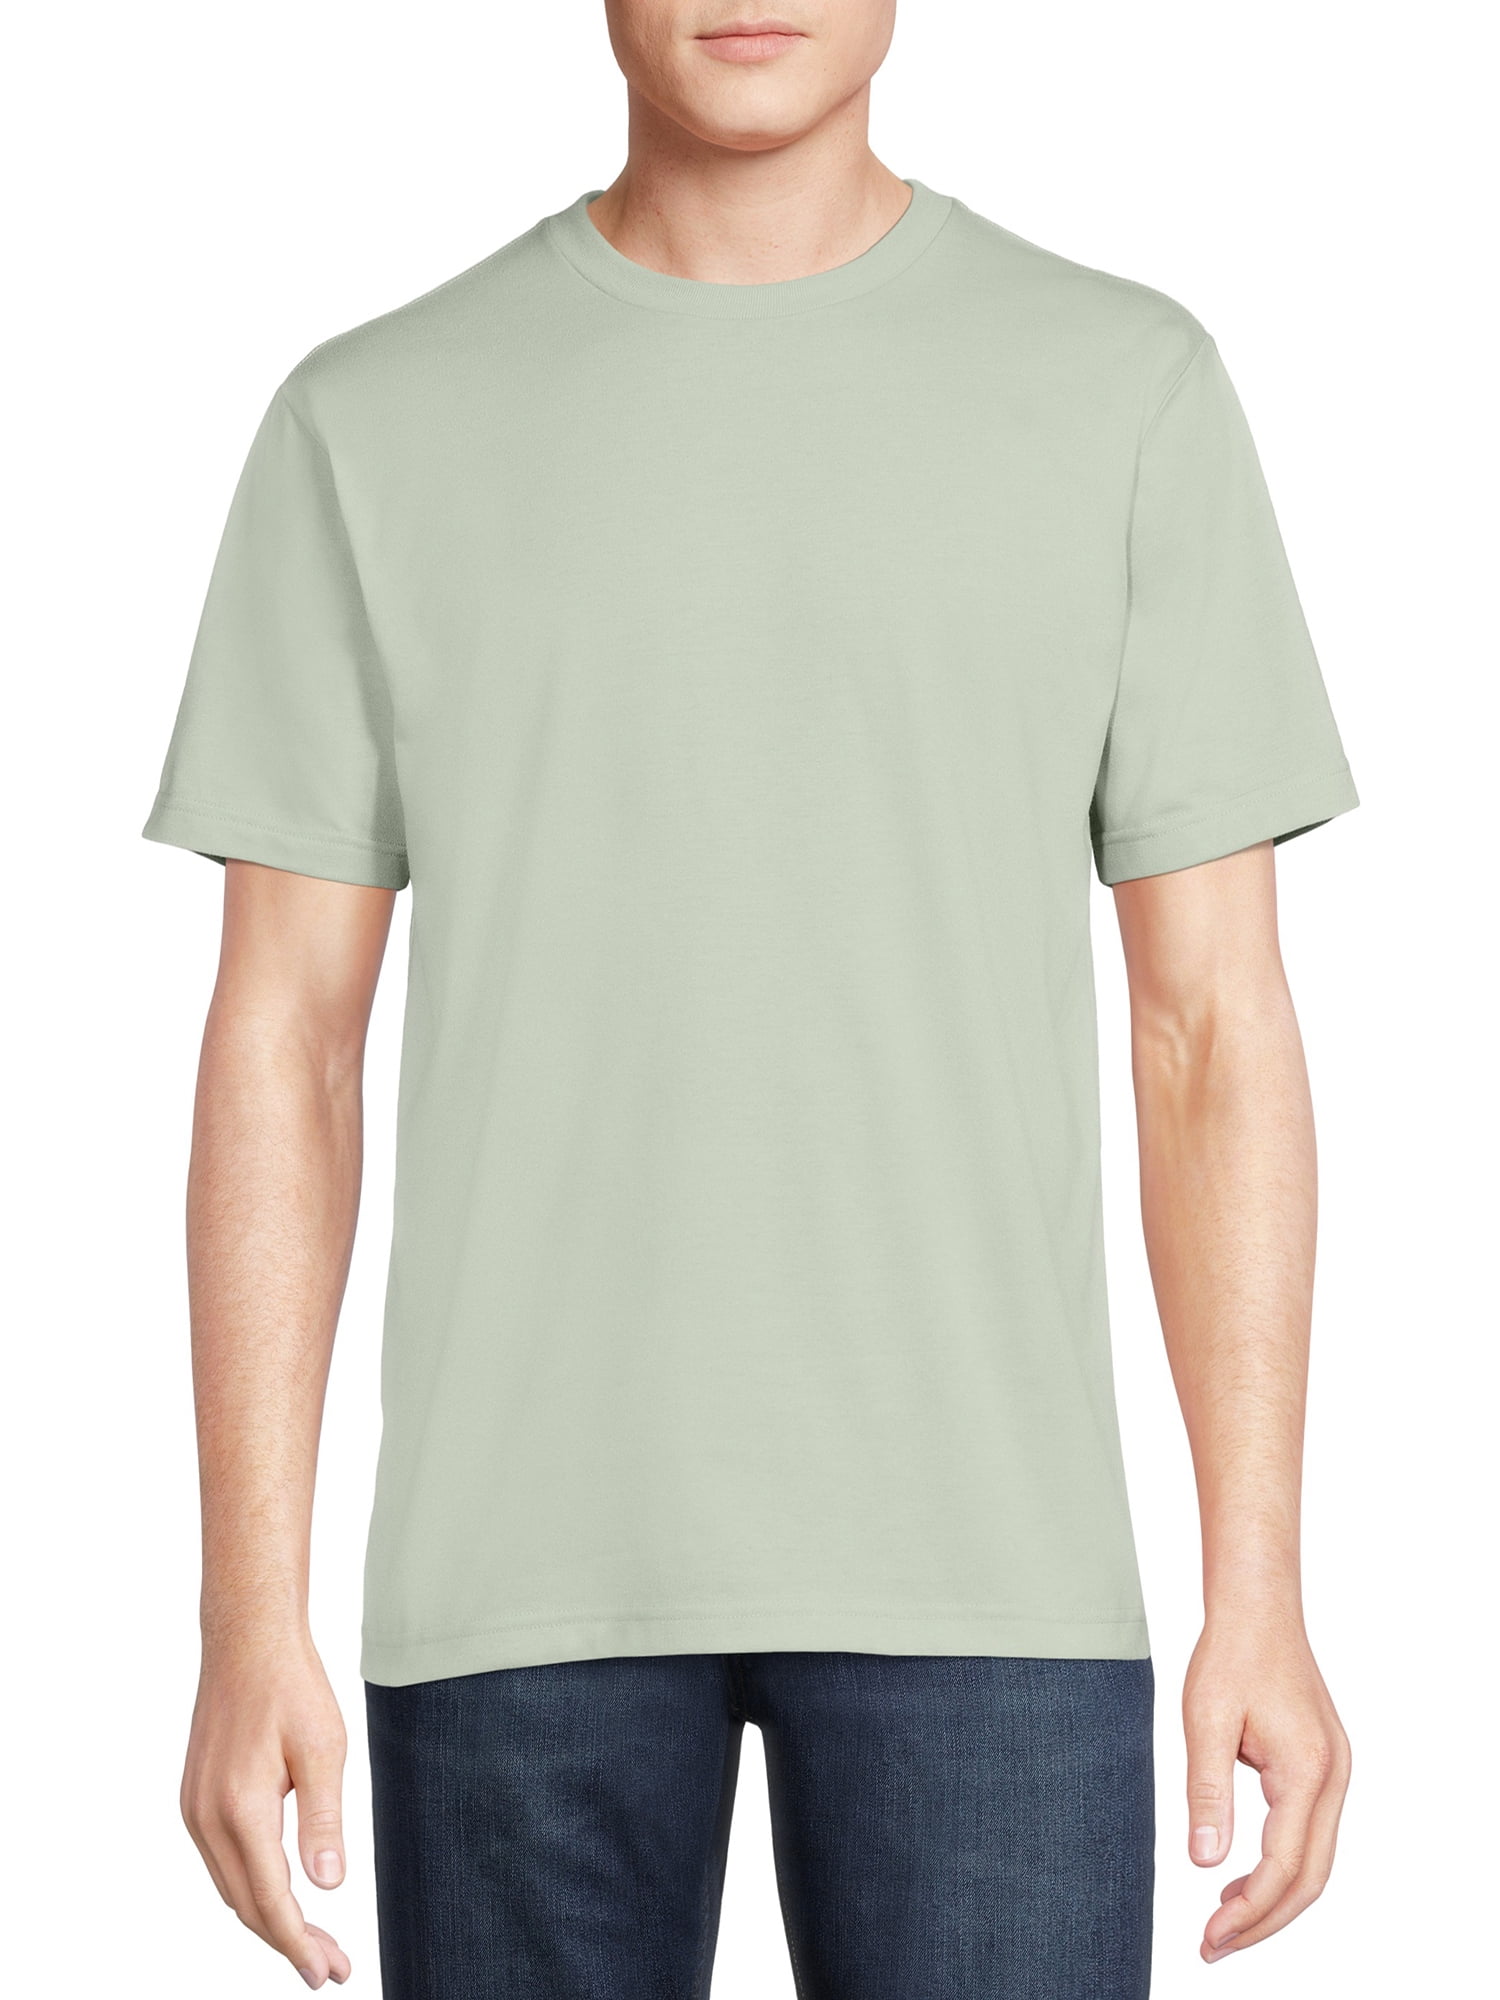 George Men’s Crewneck Short Sleeve T-Shirt - Walmart.com